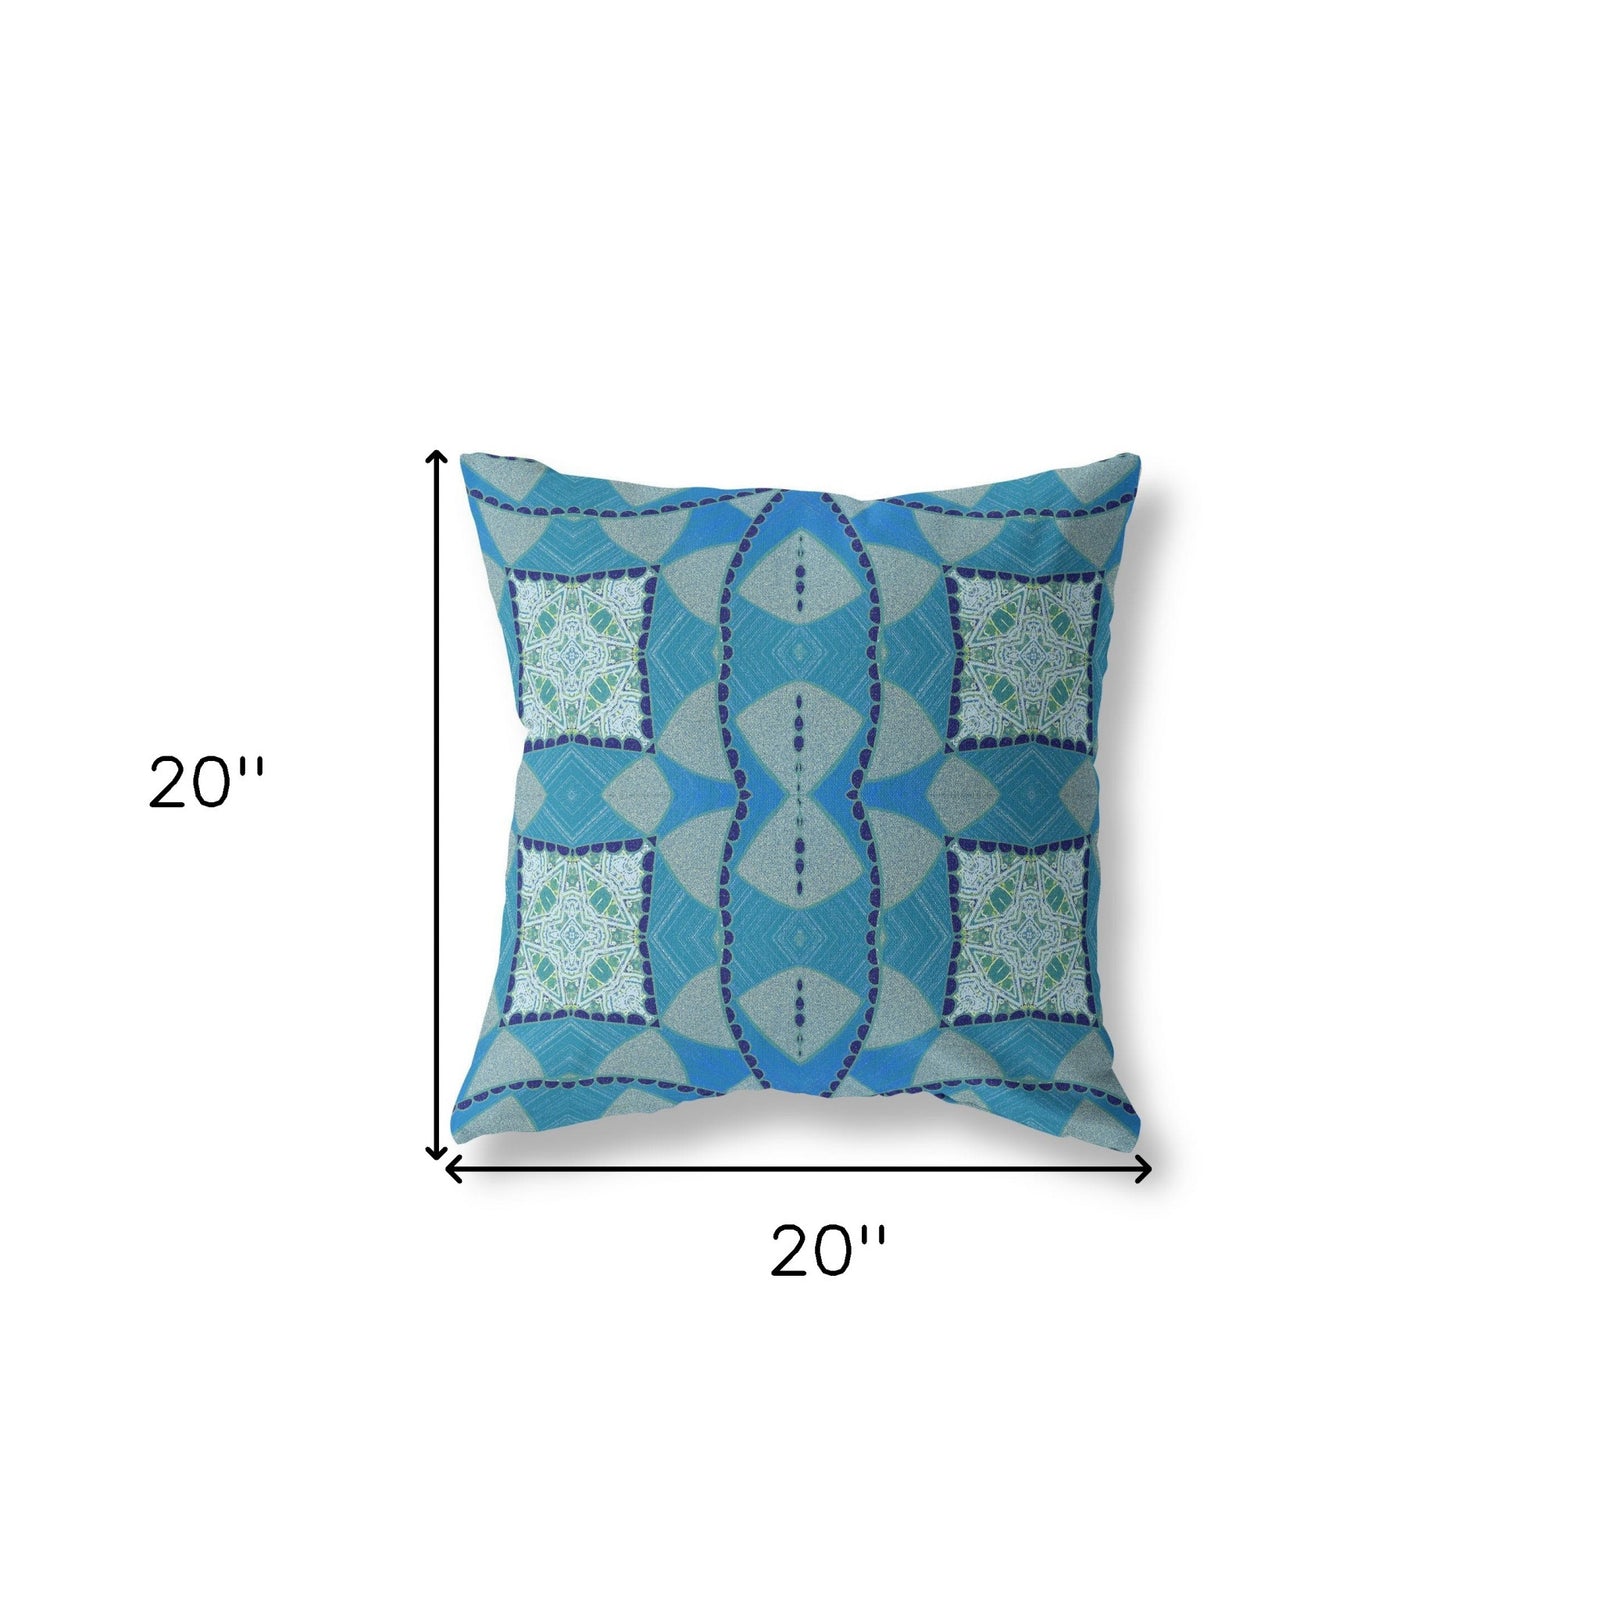 18" X 18" Aqua Blue Blown Seam Geometric Indoor Outdoor Throw Pillow